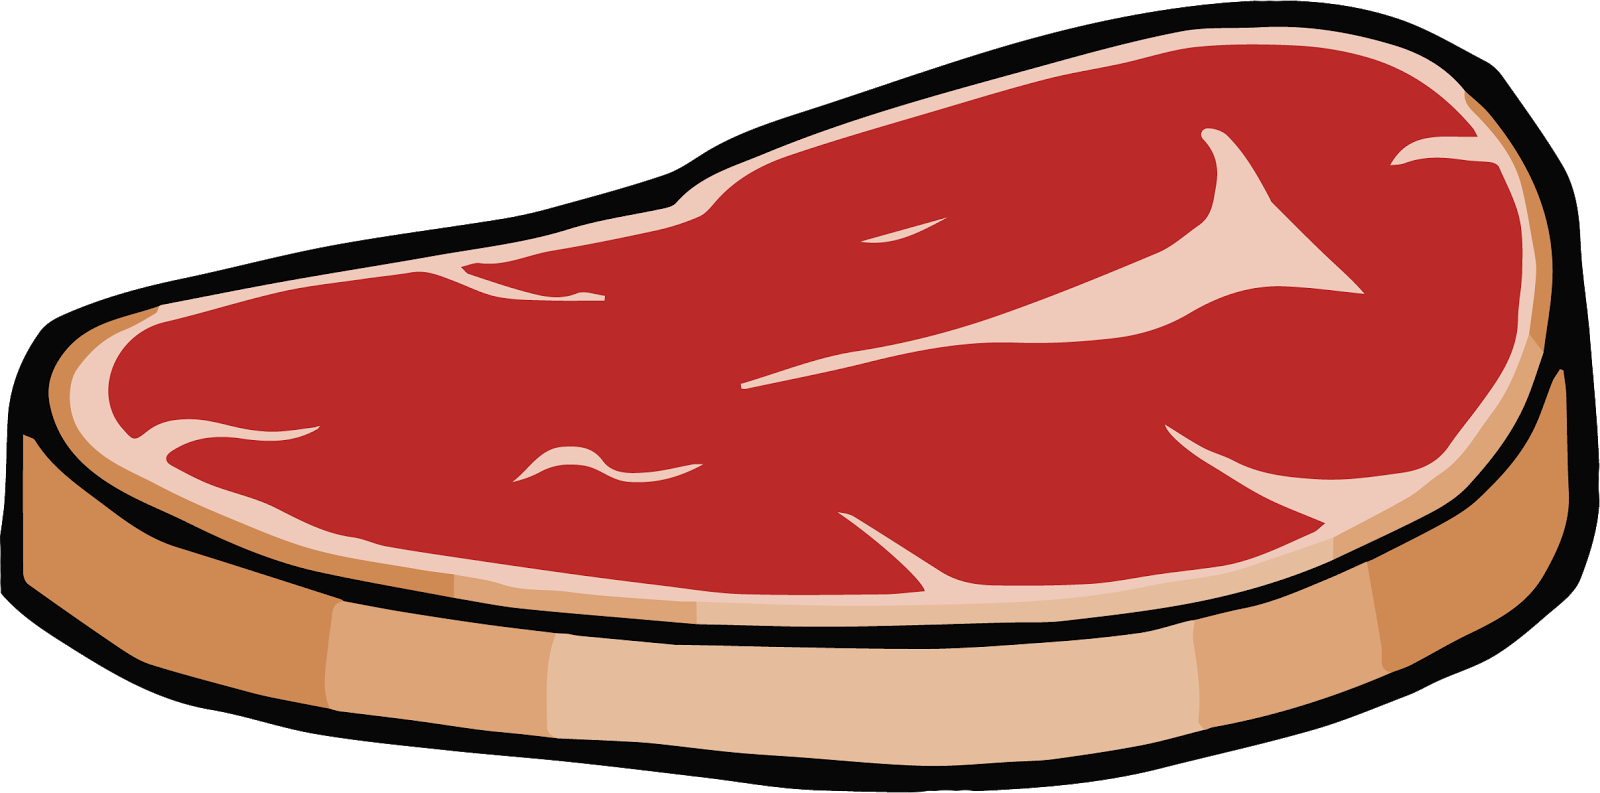 Steak clip art meats protein clipart clipart kid